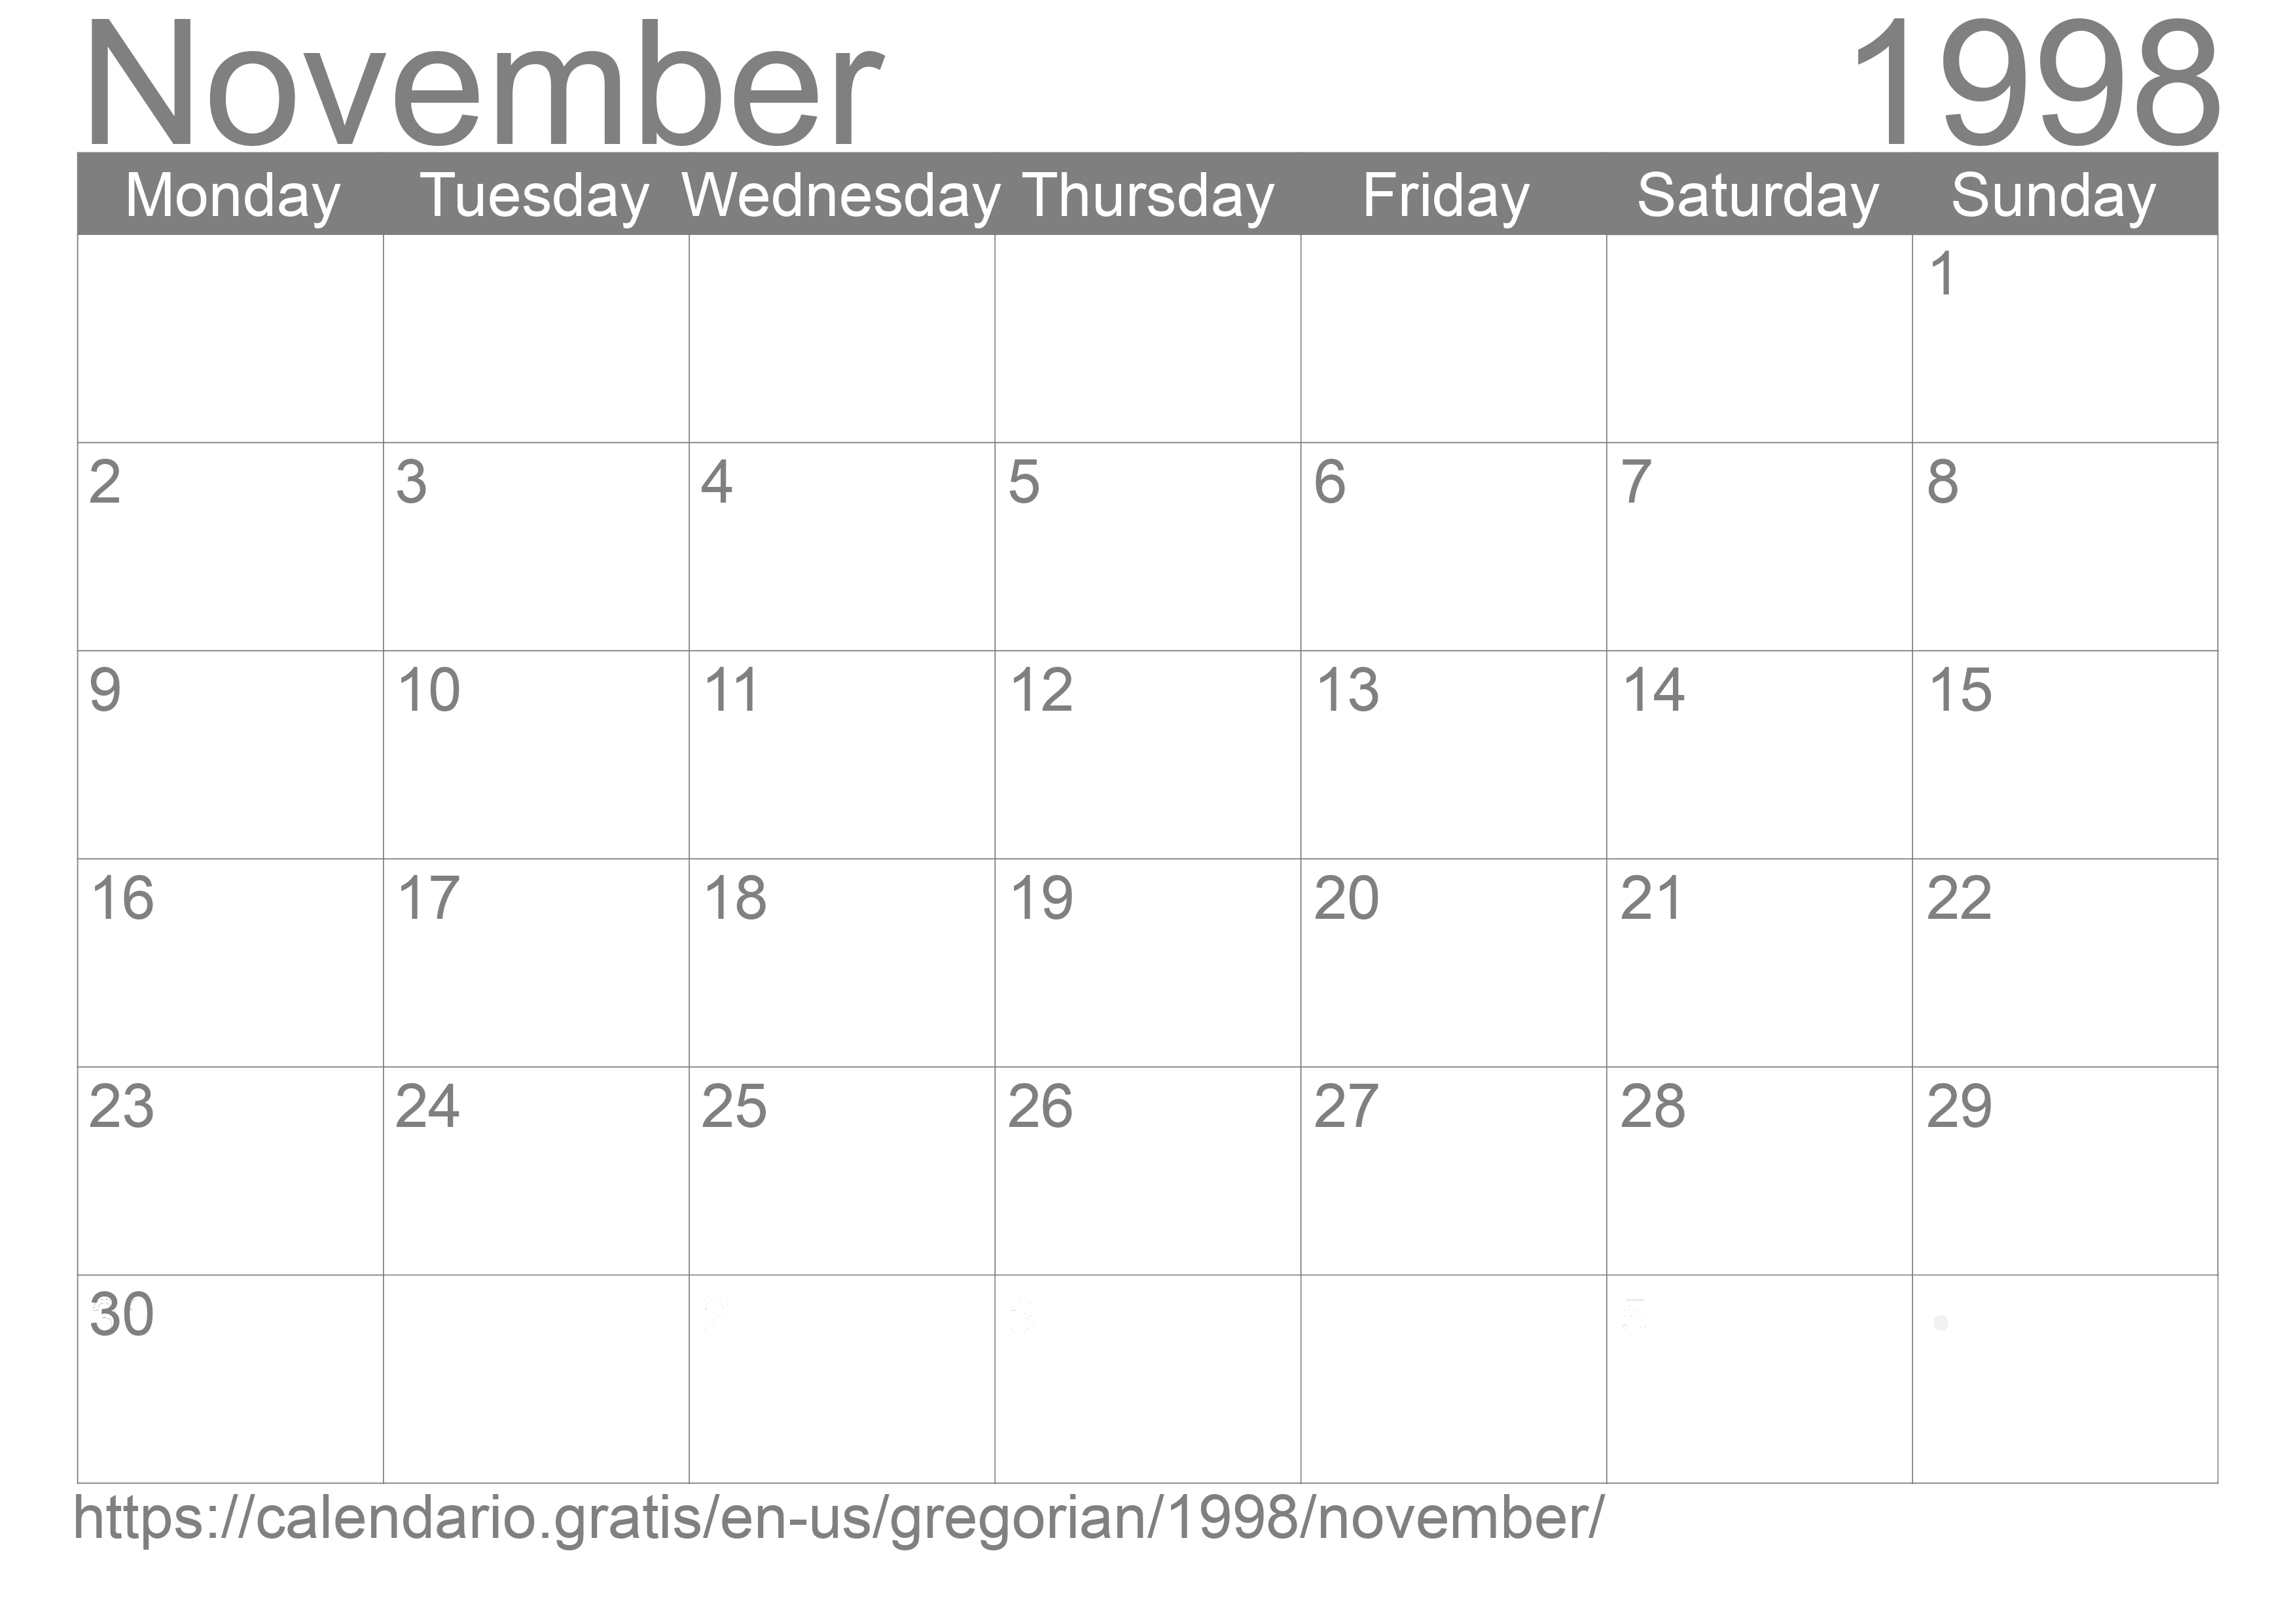 Calendar November 1998 to print